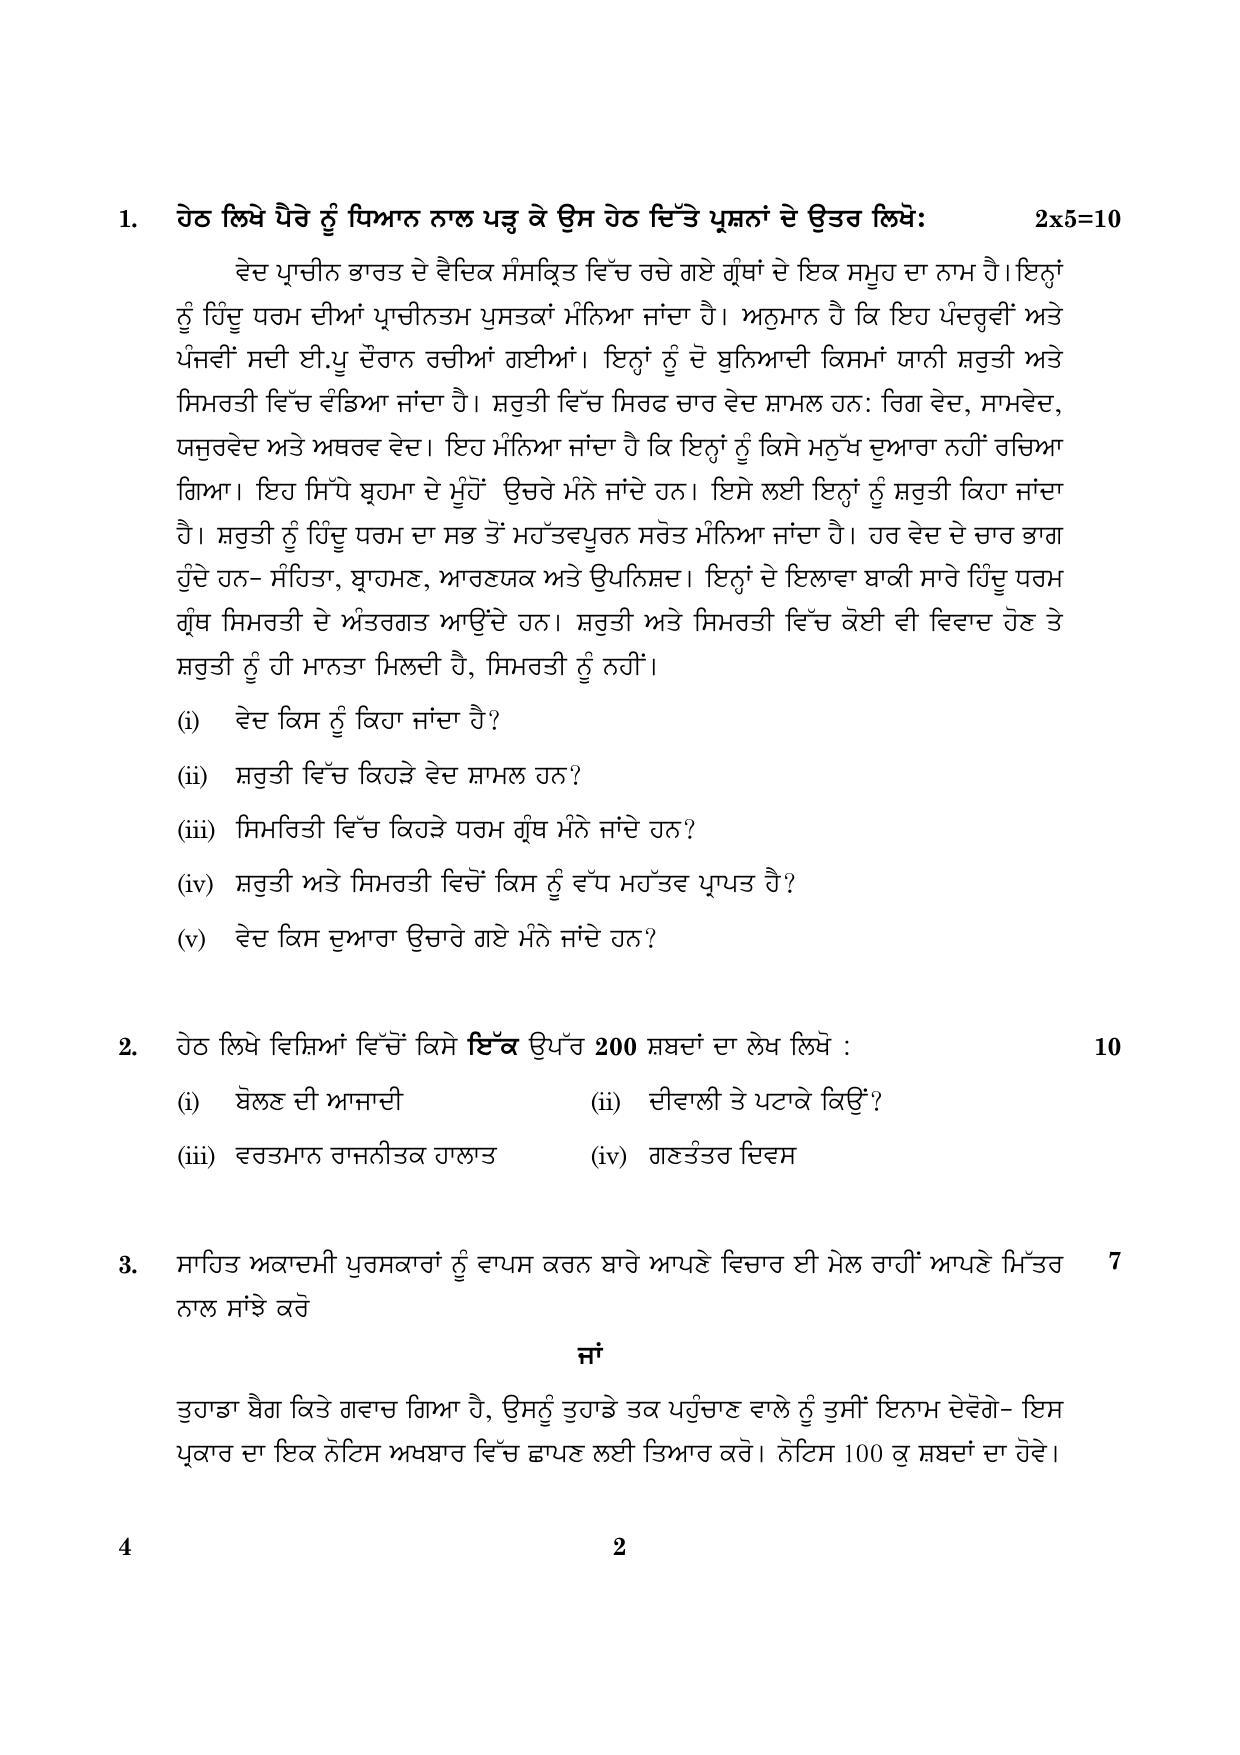 CBSE Class 12 004 Punjabi 2016 Question Paper - Page 2